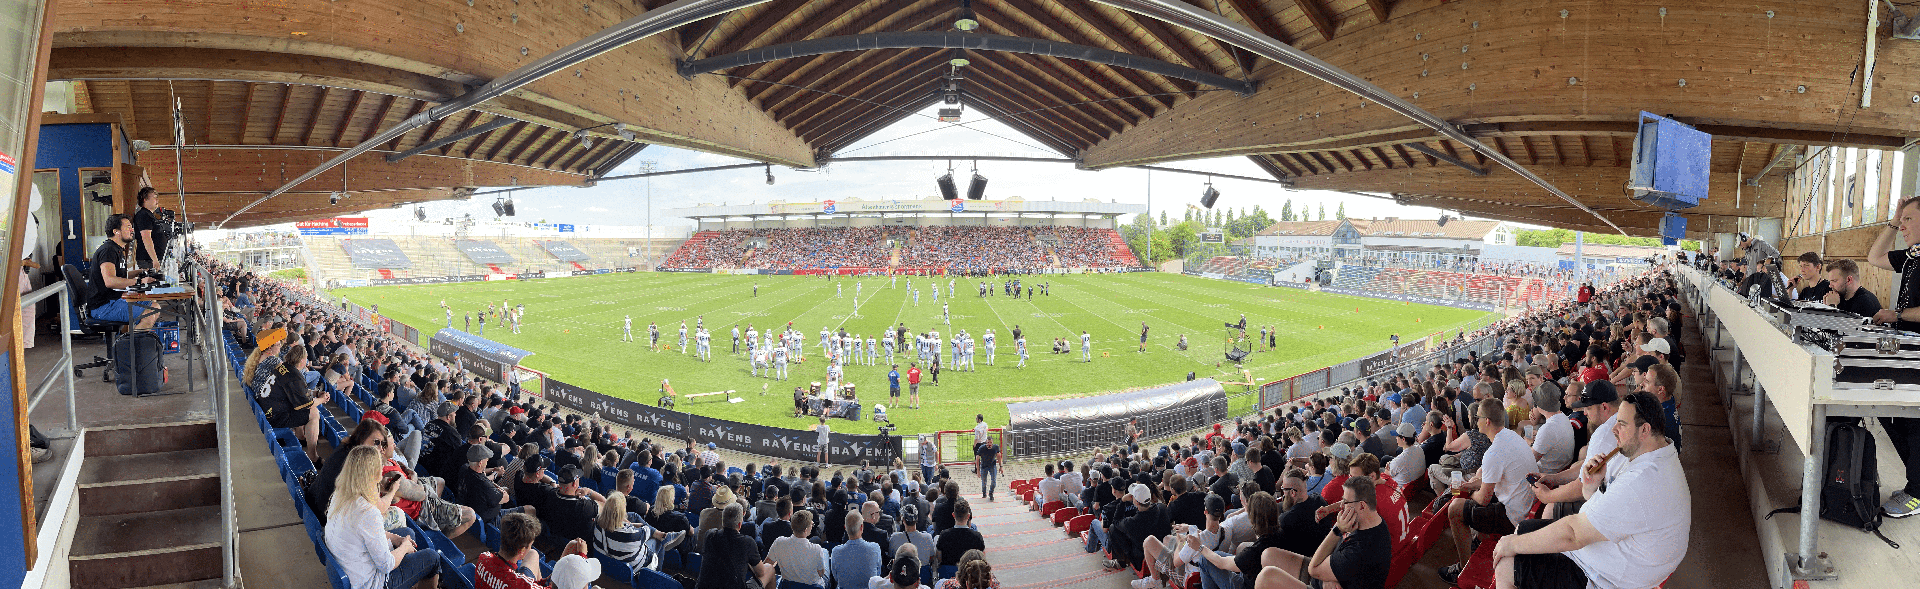 European League of Football - Stadium Shot-small